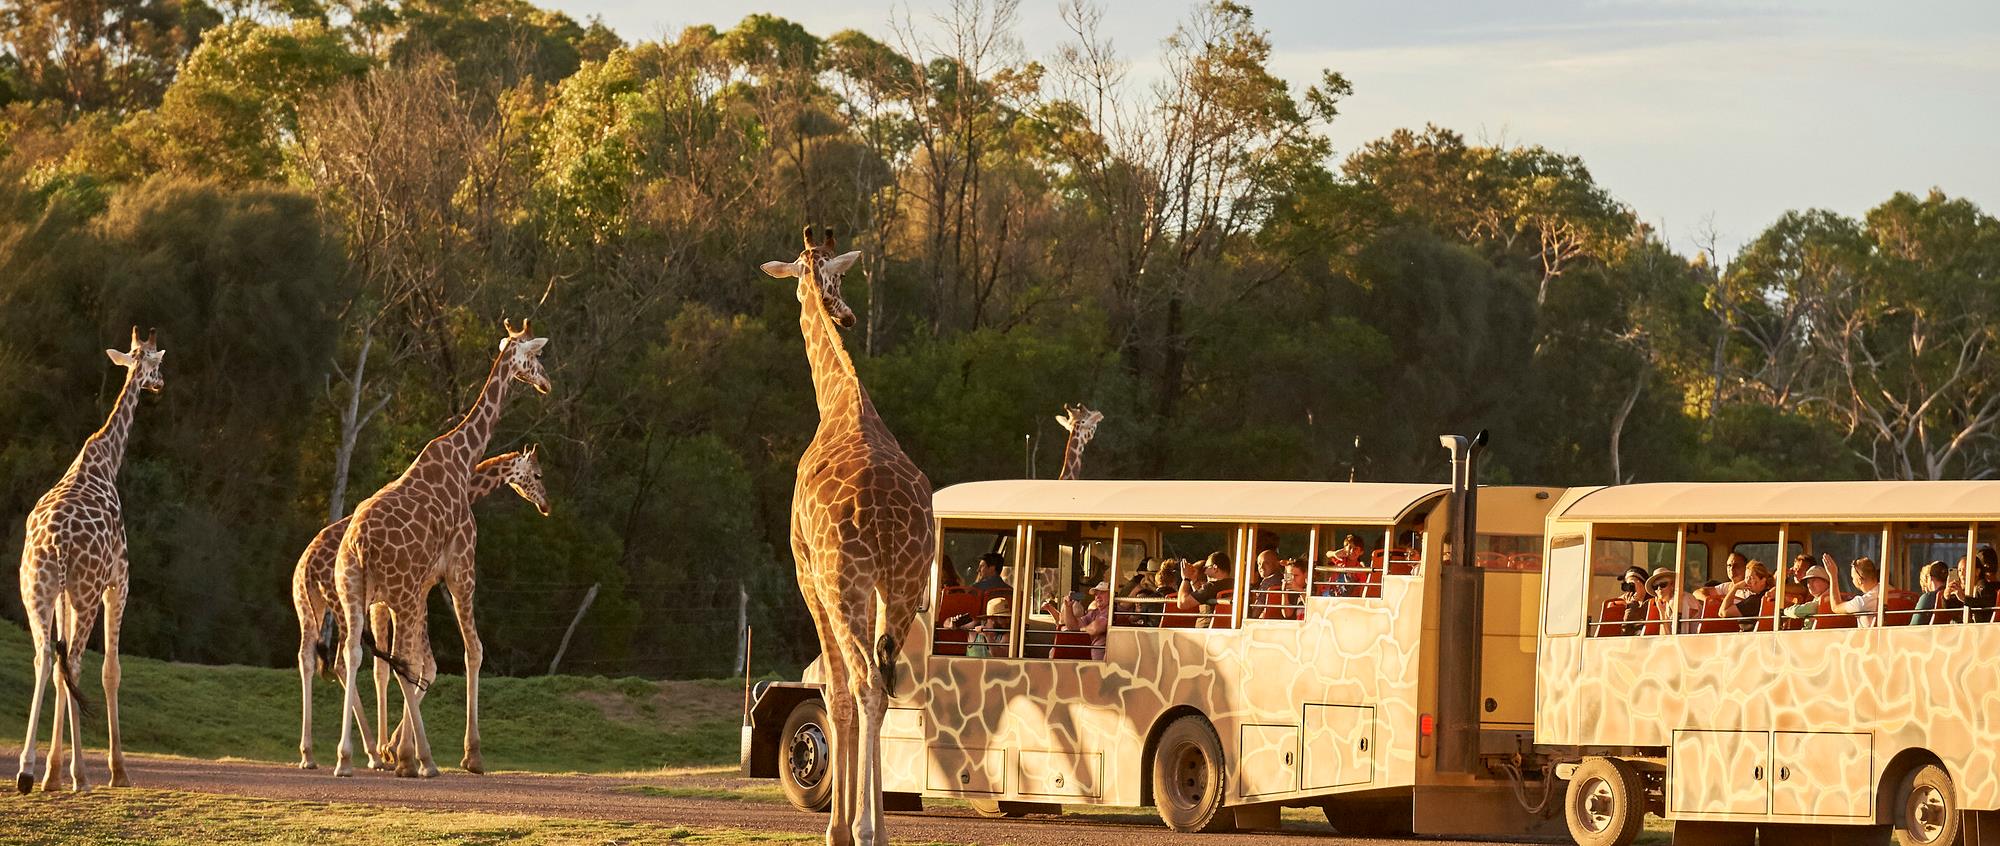 Five Giraffes looking at a passing Safari Bus at dusk.